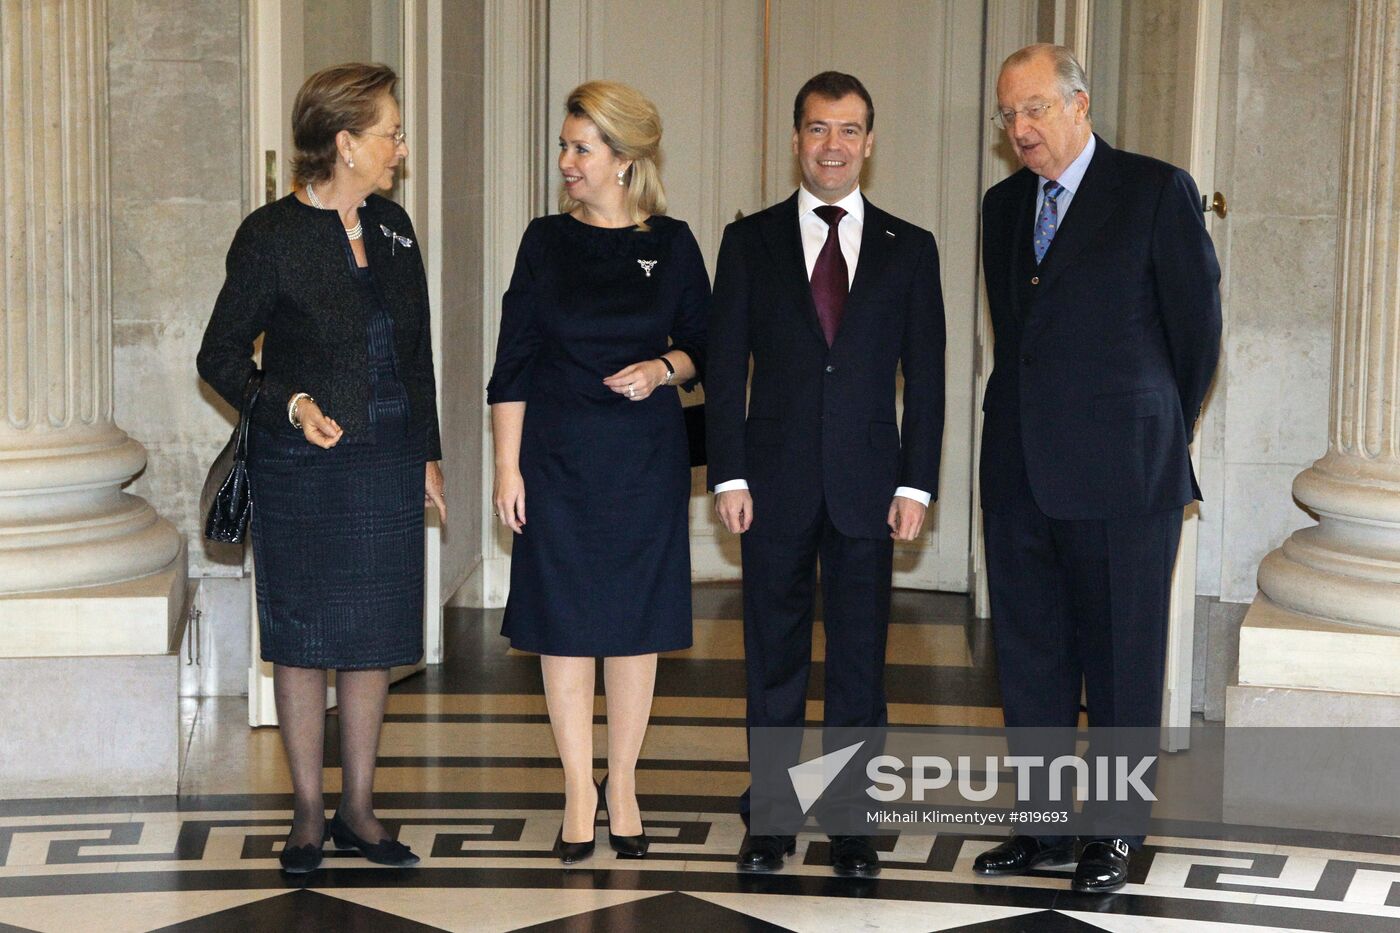 Dmitry Medvedev's official visit to Belgium